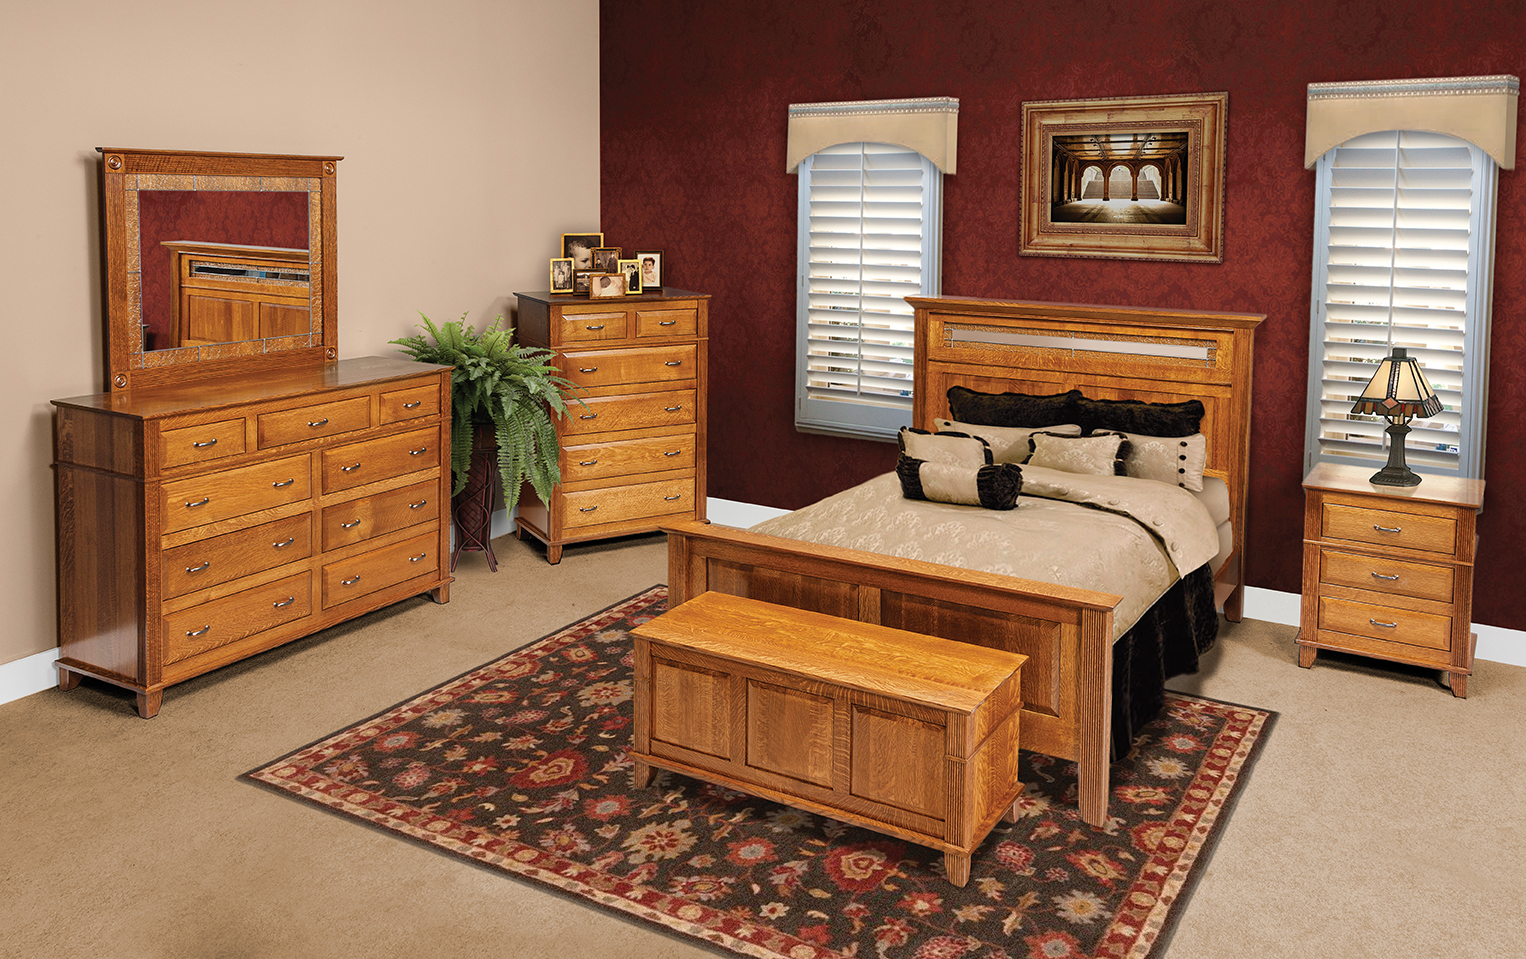 a bedroom bureau amish furniture